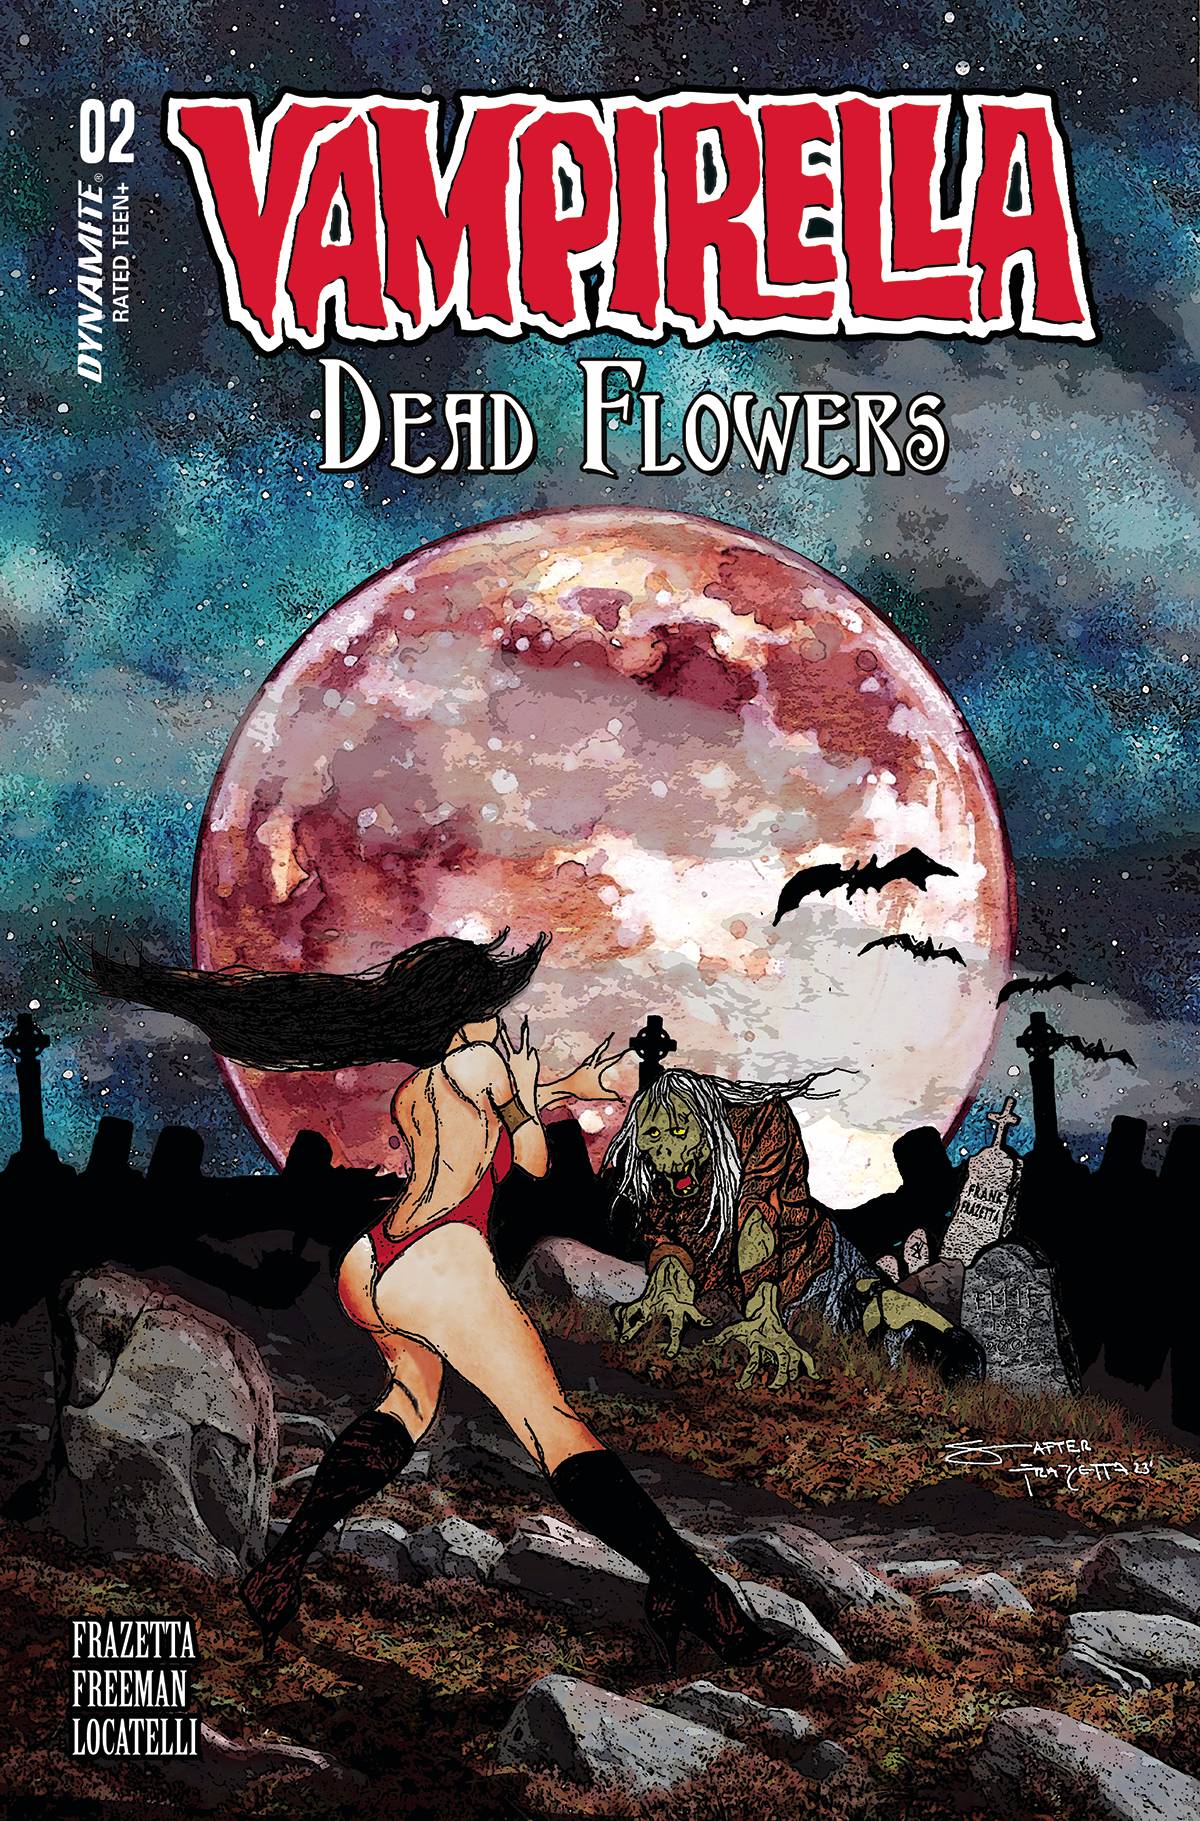 Vampirella: Dead Flowers #1-4 by Sara Frazetta (Comic Books)